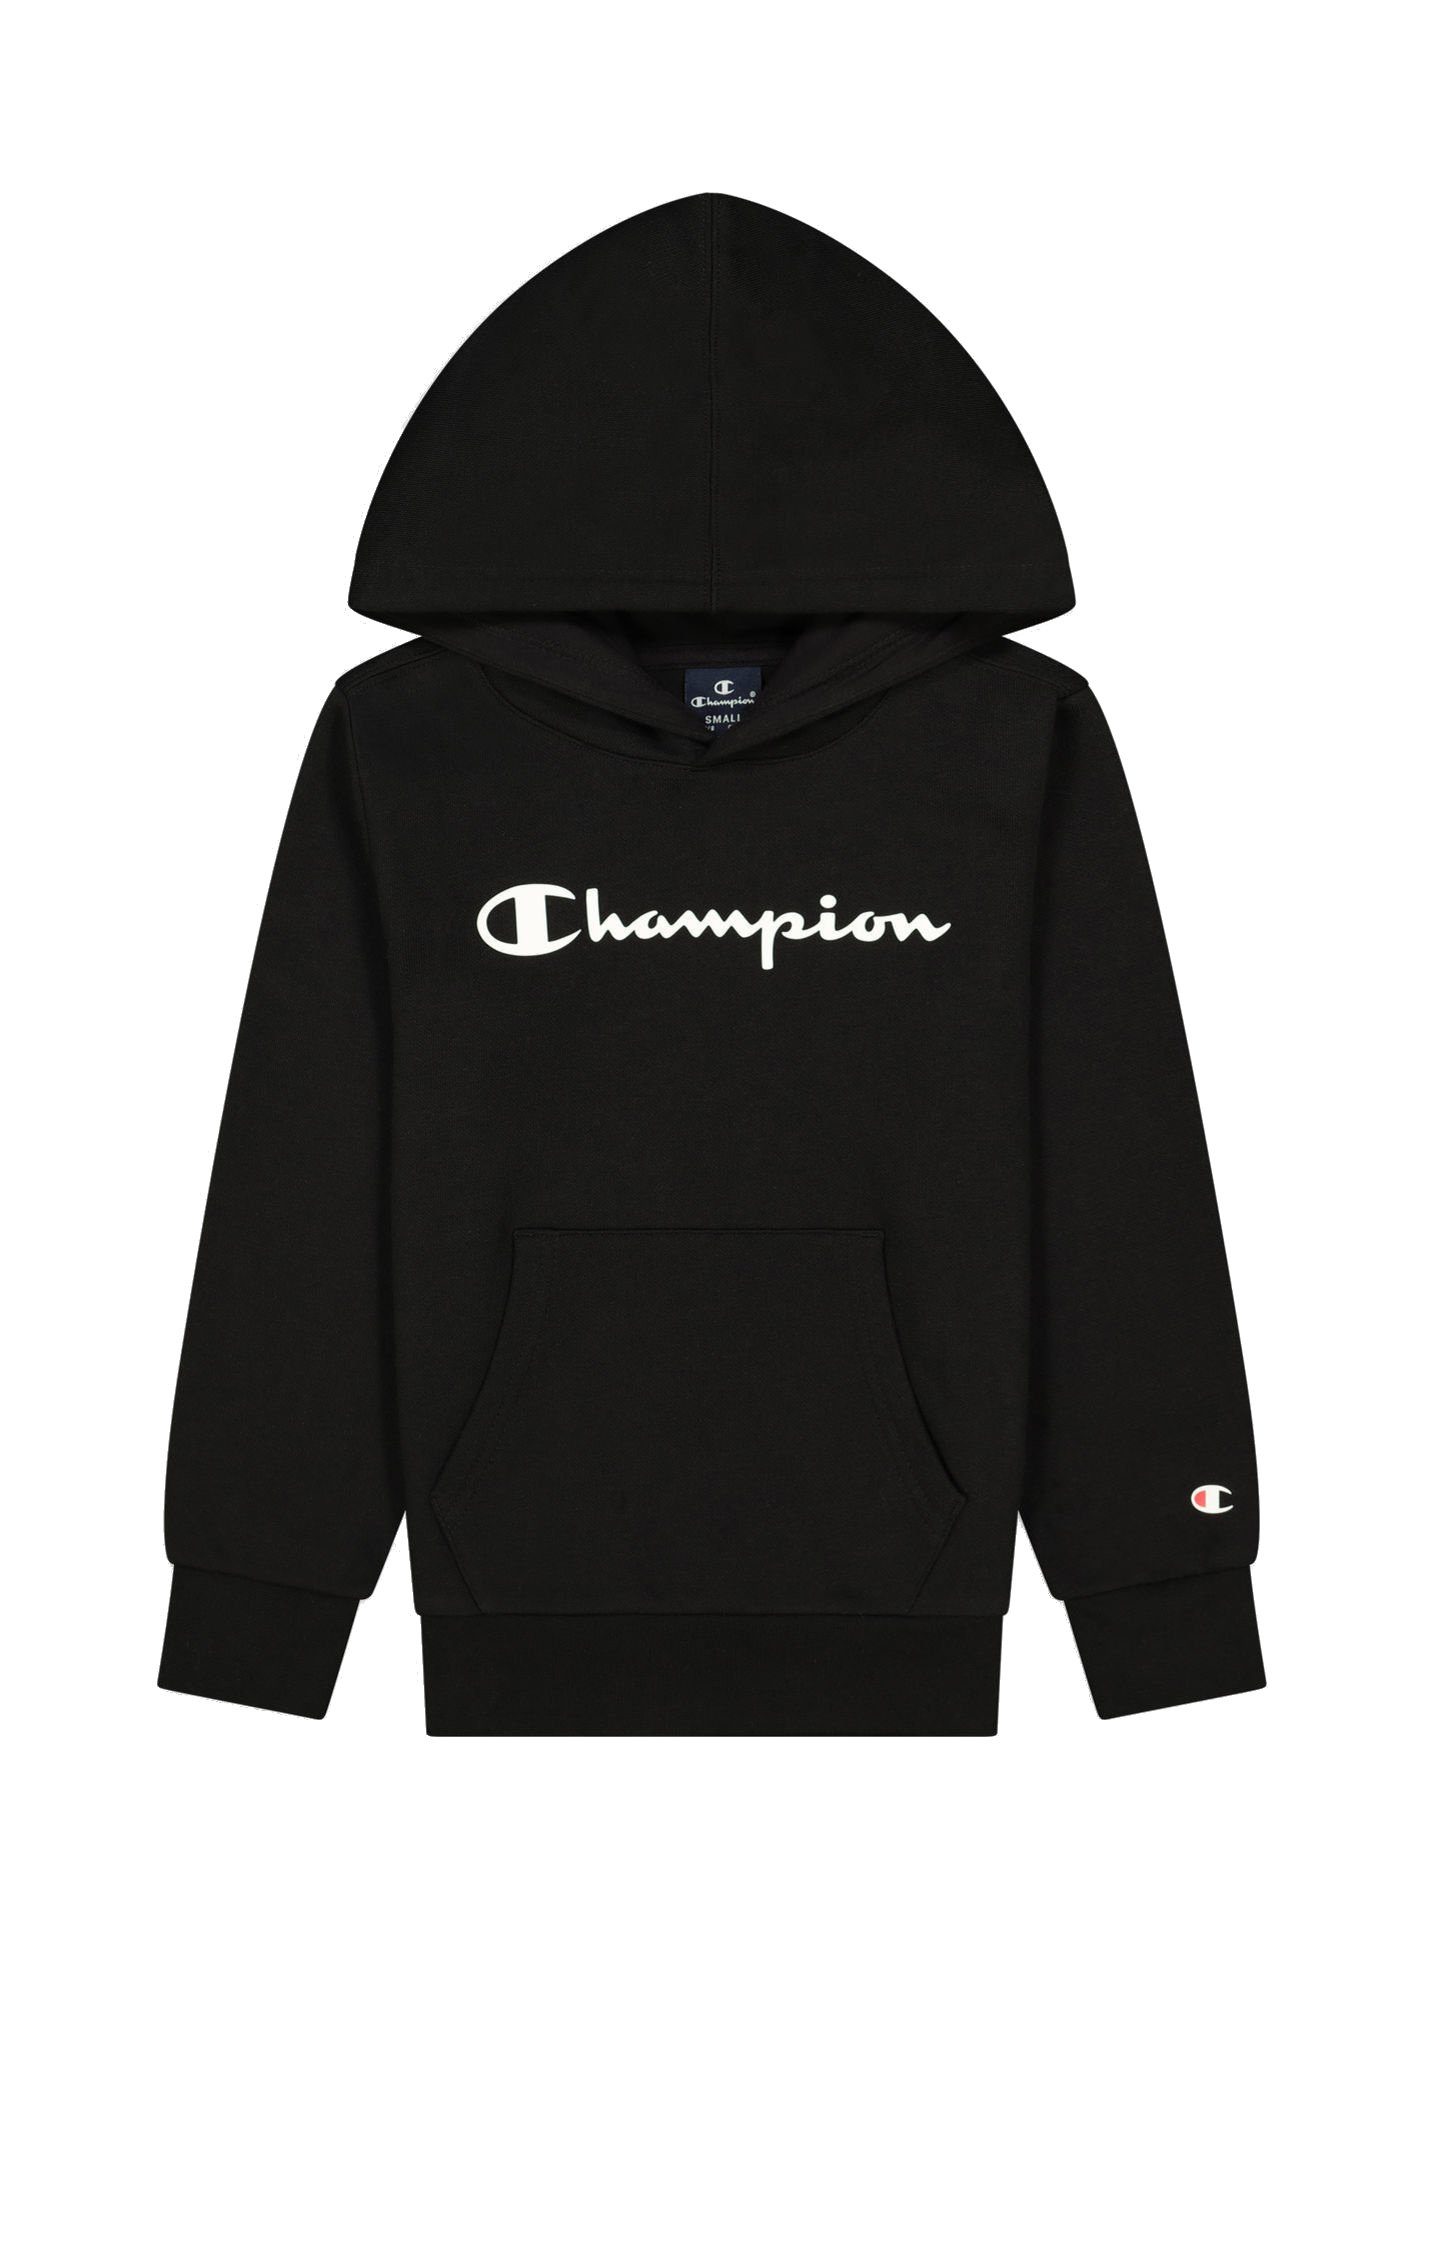 Champion Hoodie Champion Kinder Kapuzenpullover Hooded Sweatshirt 305358 schwarz (nbk)